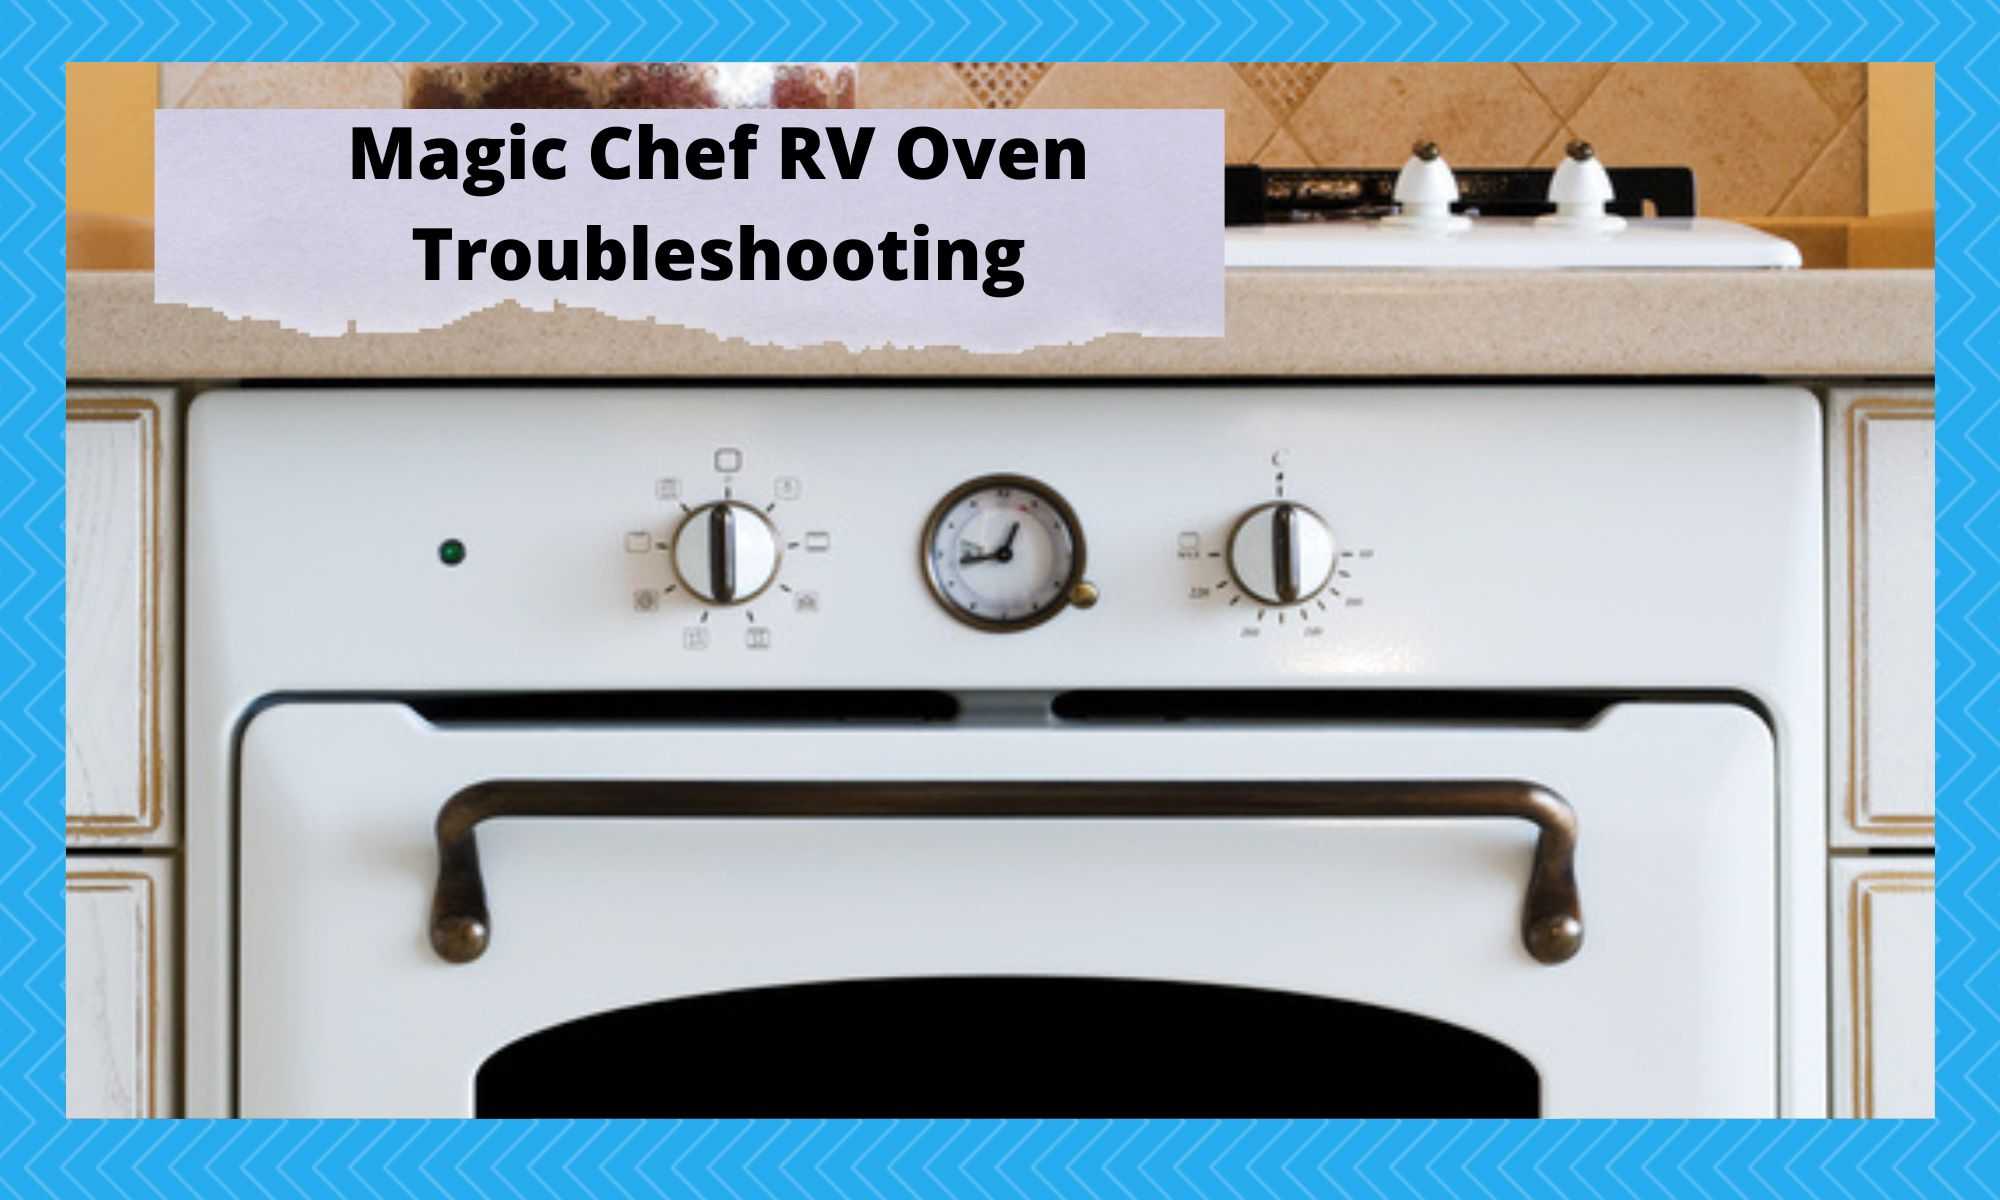 Magic Chef RV Oven Troubleshooting